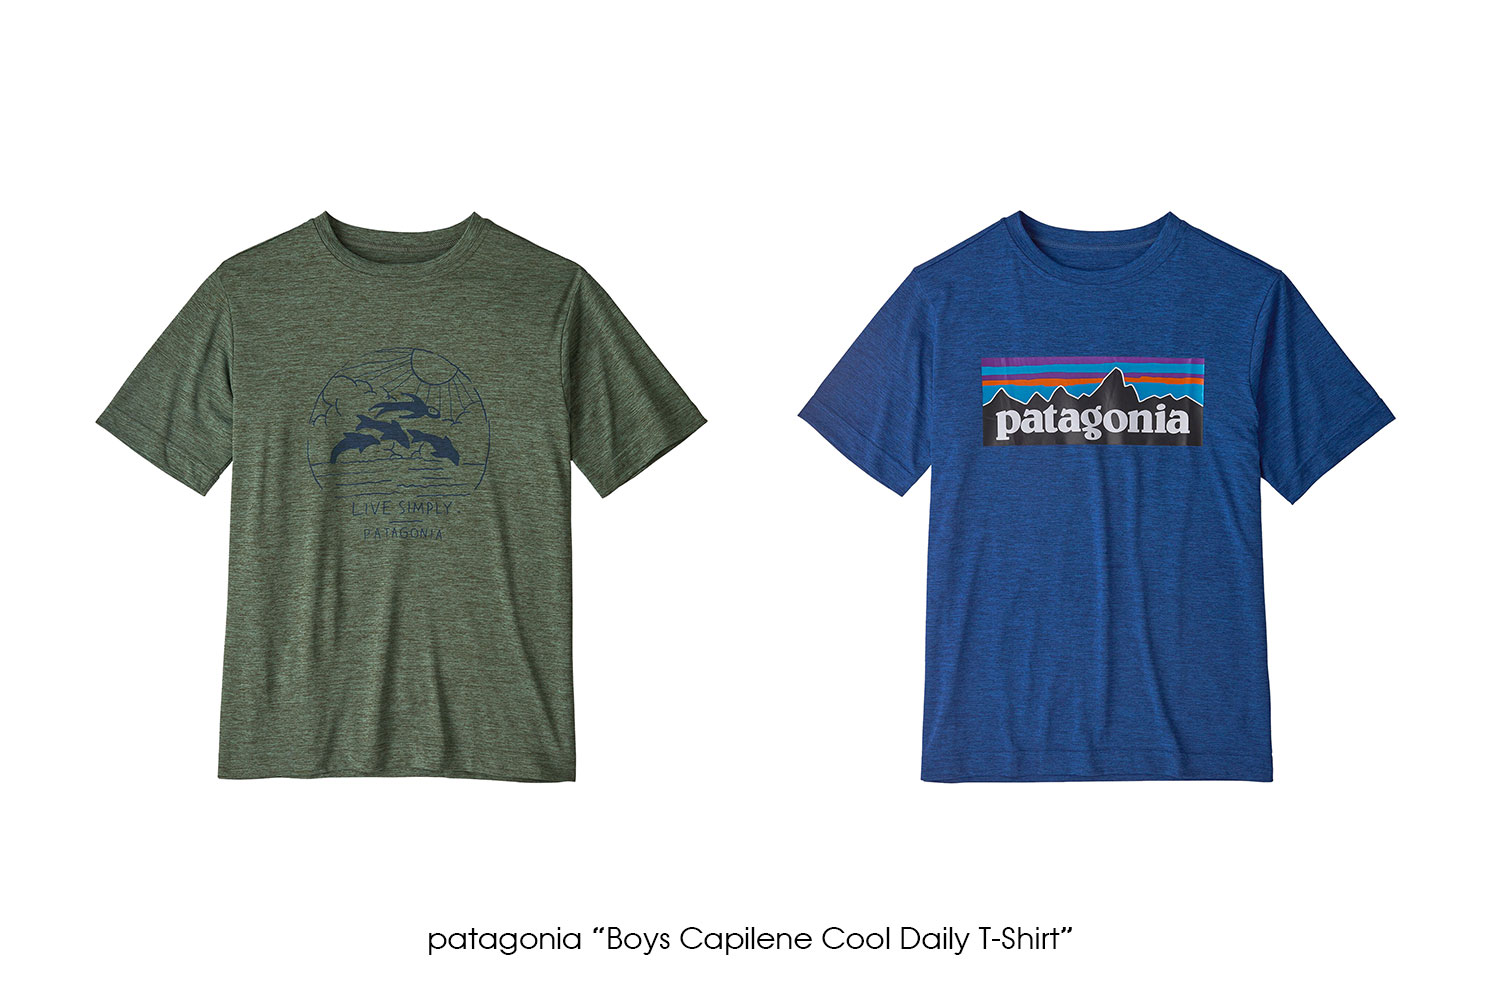 patagonia "Boys Capilene Cool Daily T-Shirt"